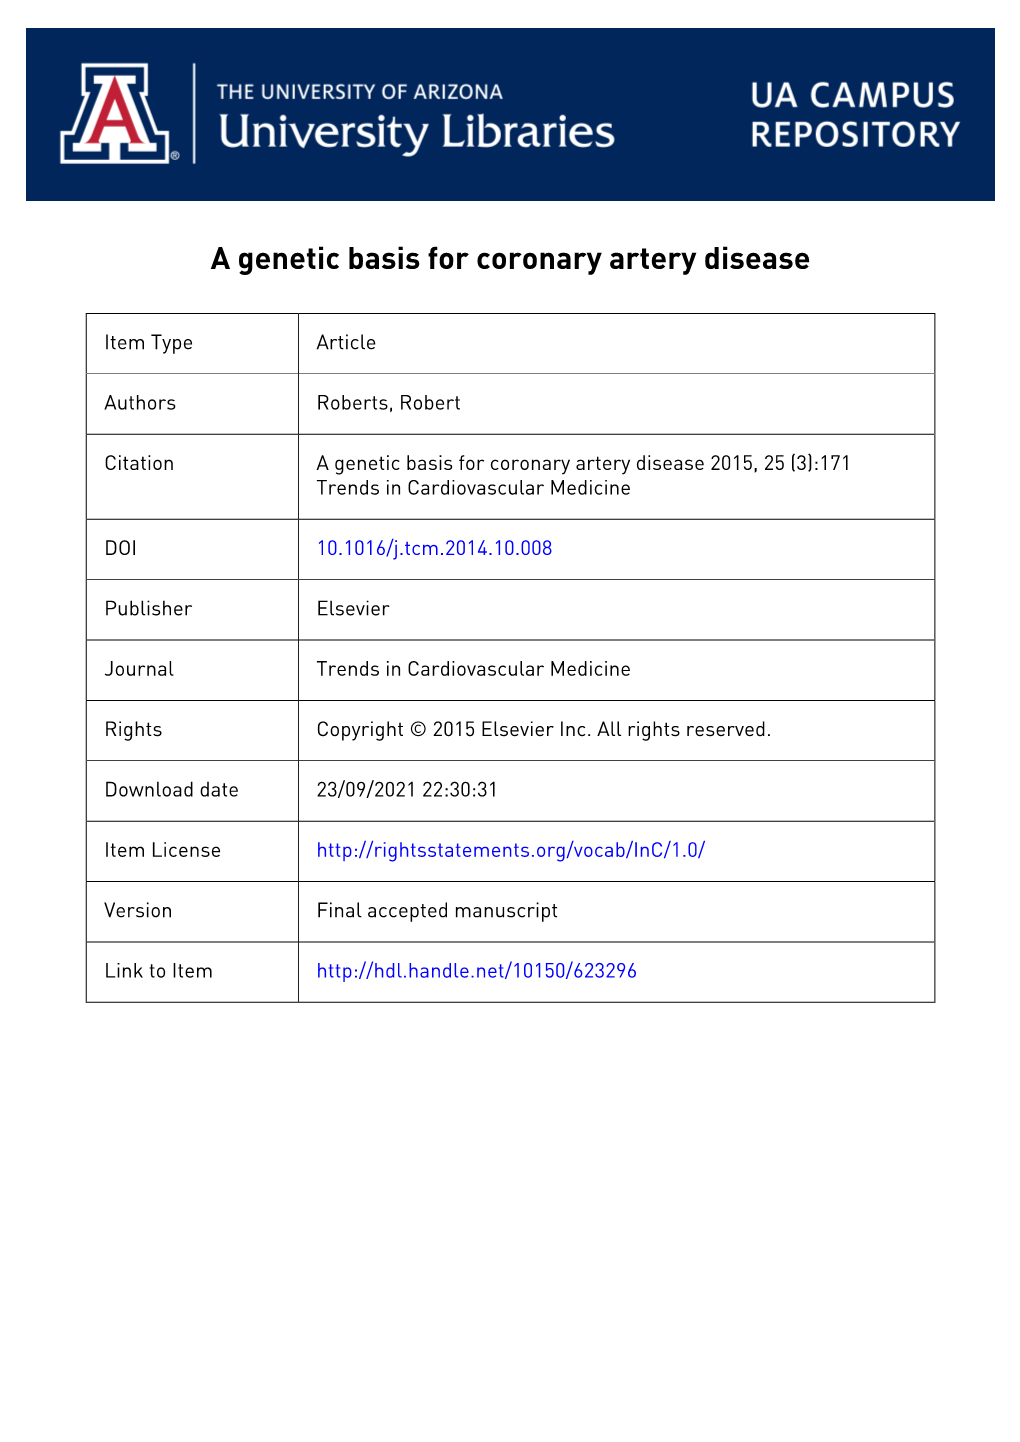 A Genetic Basis for Coronary Artery Disease